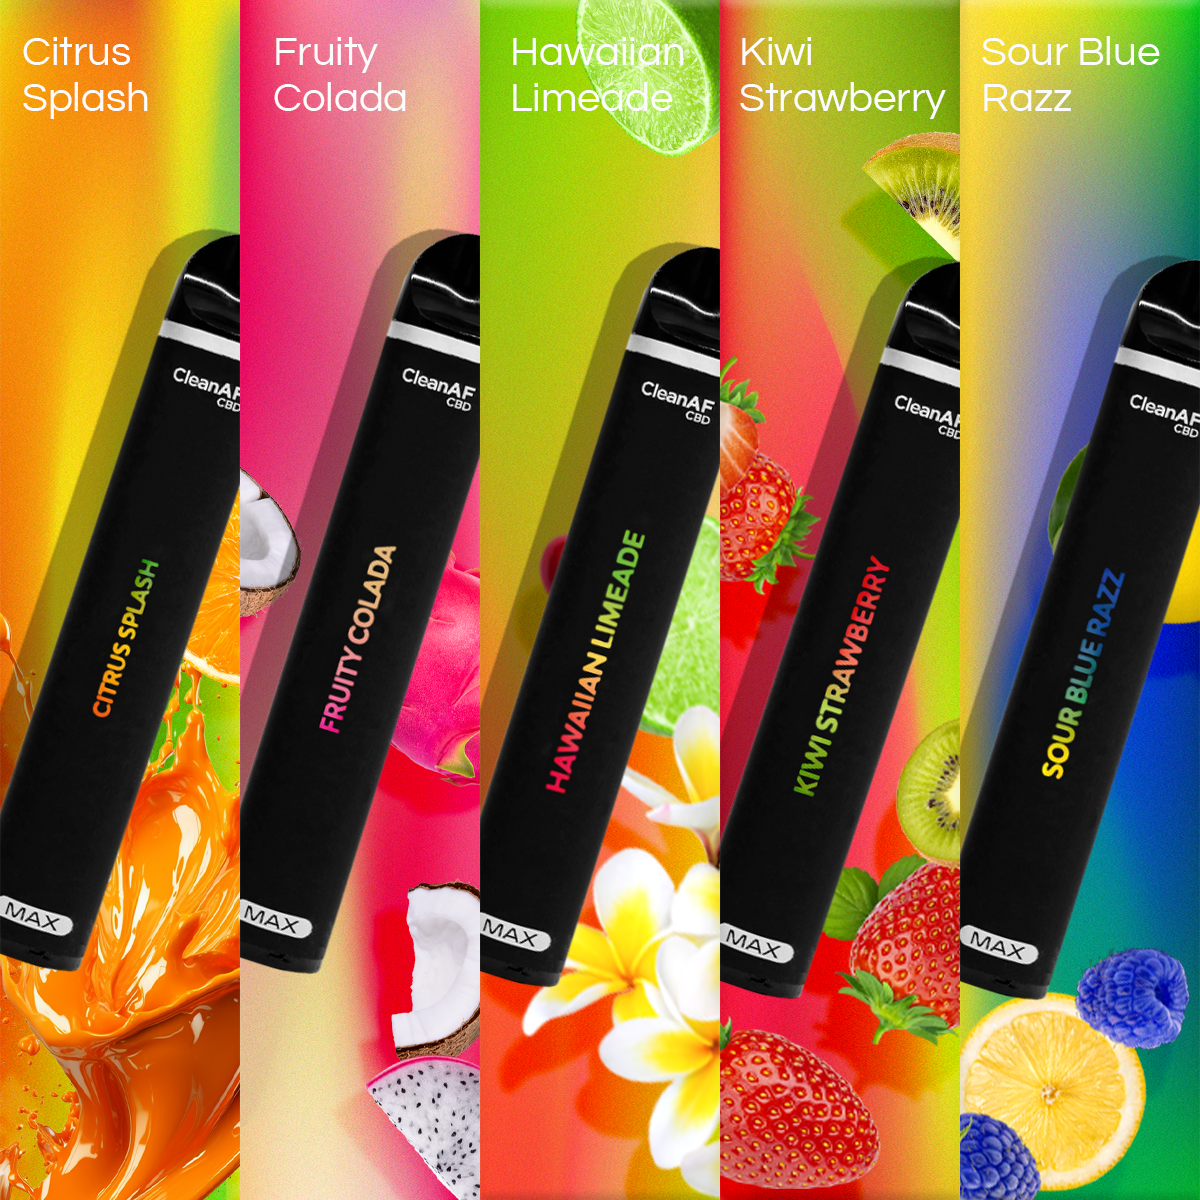 5pc Fruity Flavor Pack | 500mg CBD Vape Pen